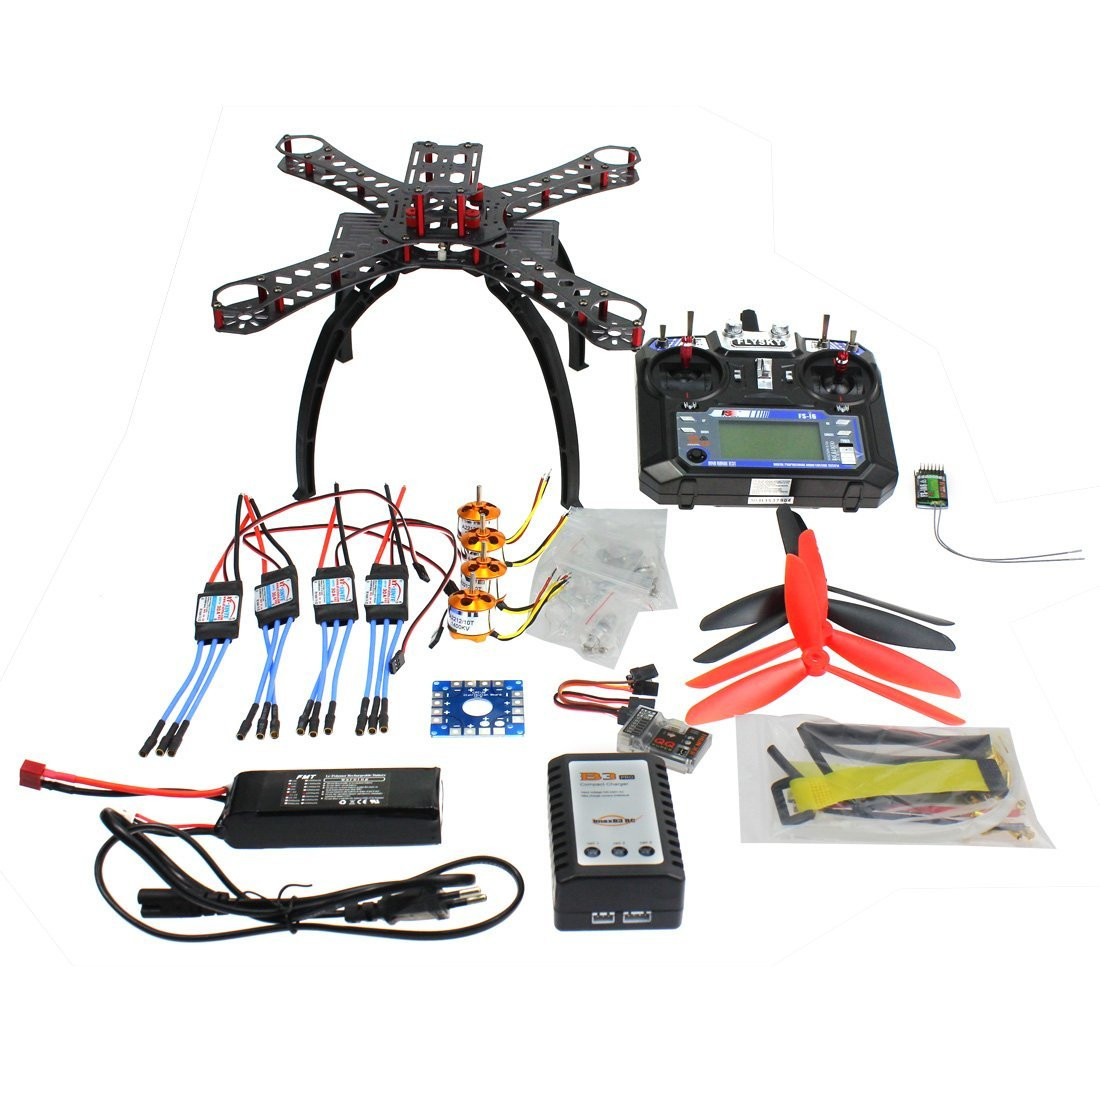 Best DIY Drone Kits
 The Best Educational DIY Drone Kits in 2017